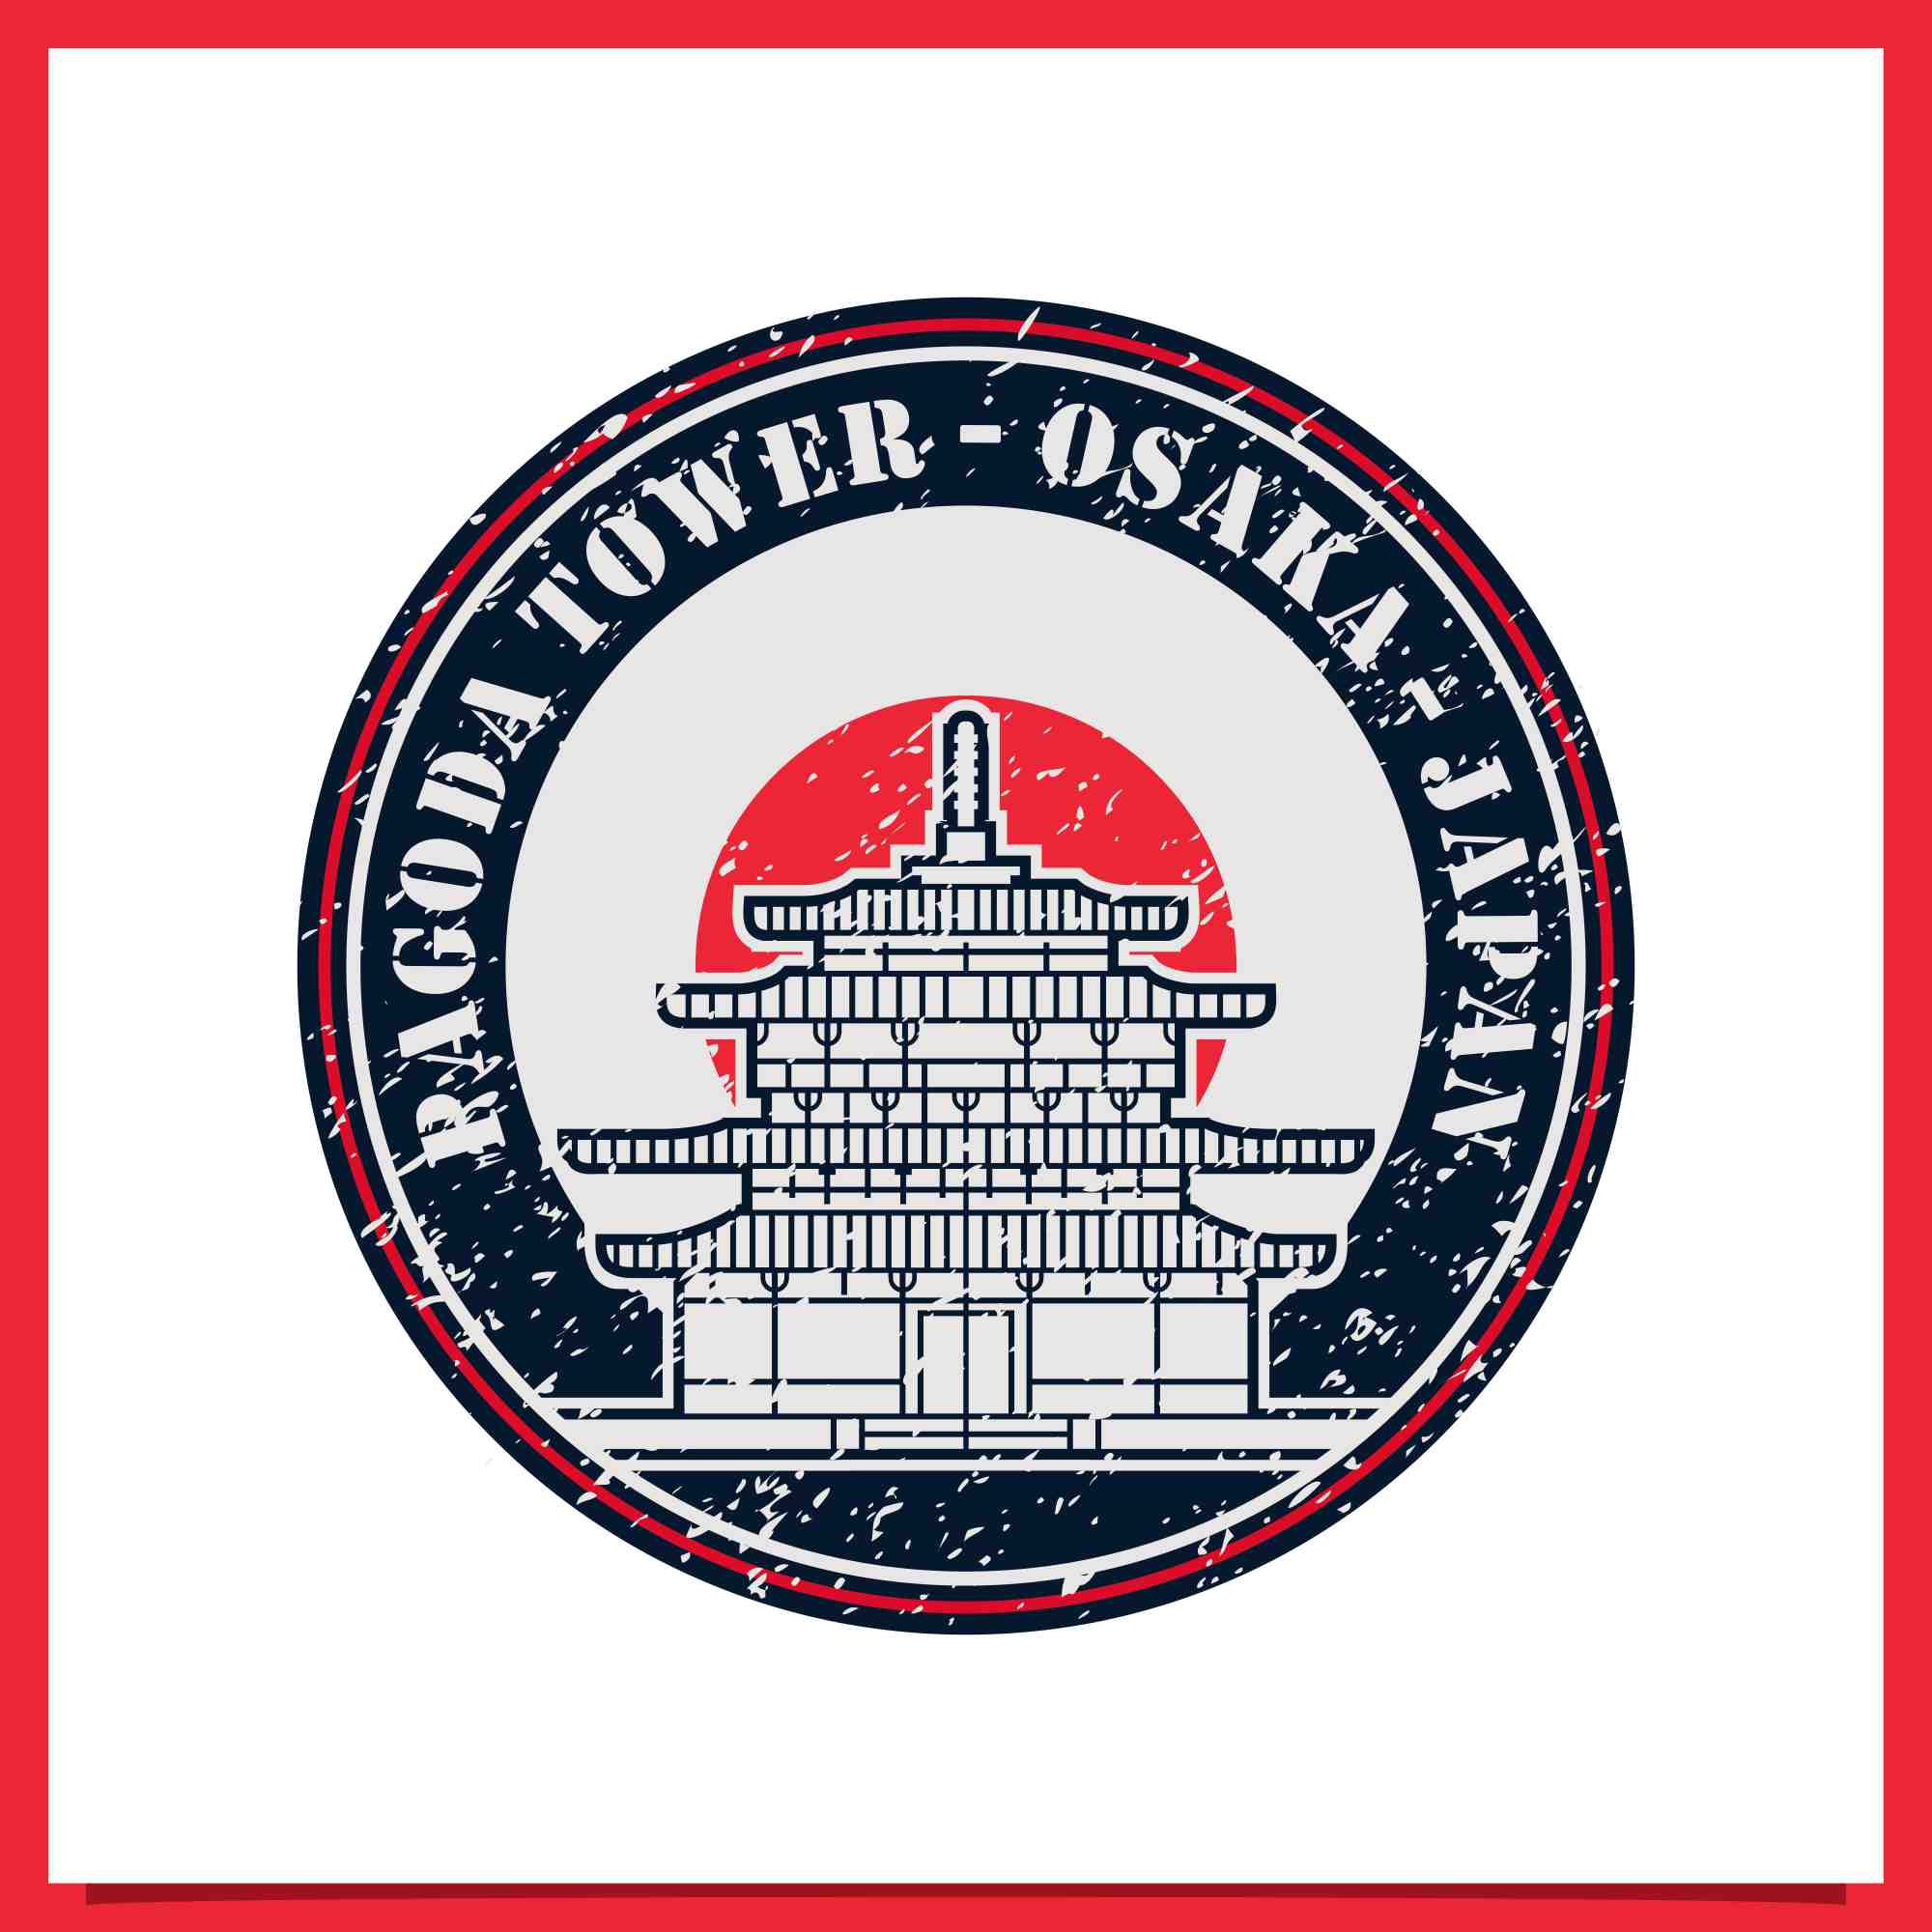 Pagoda Tower Osaka Japan logo design collection - $4 preview image.